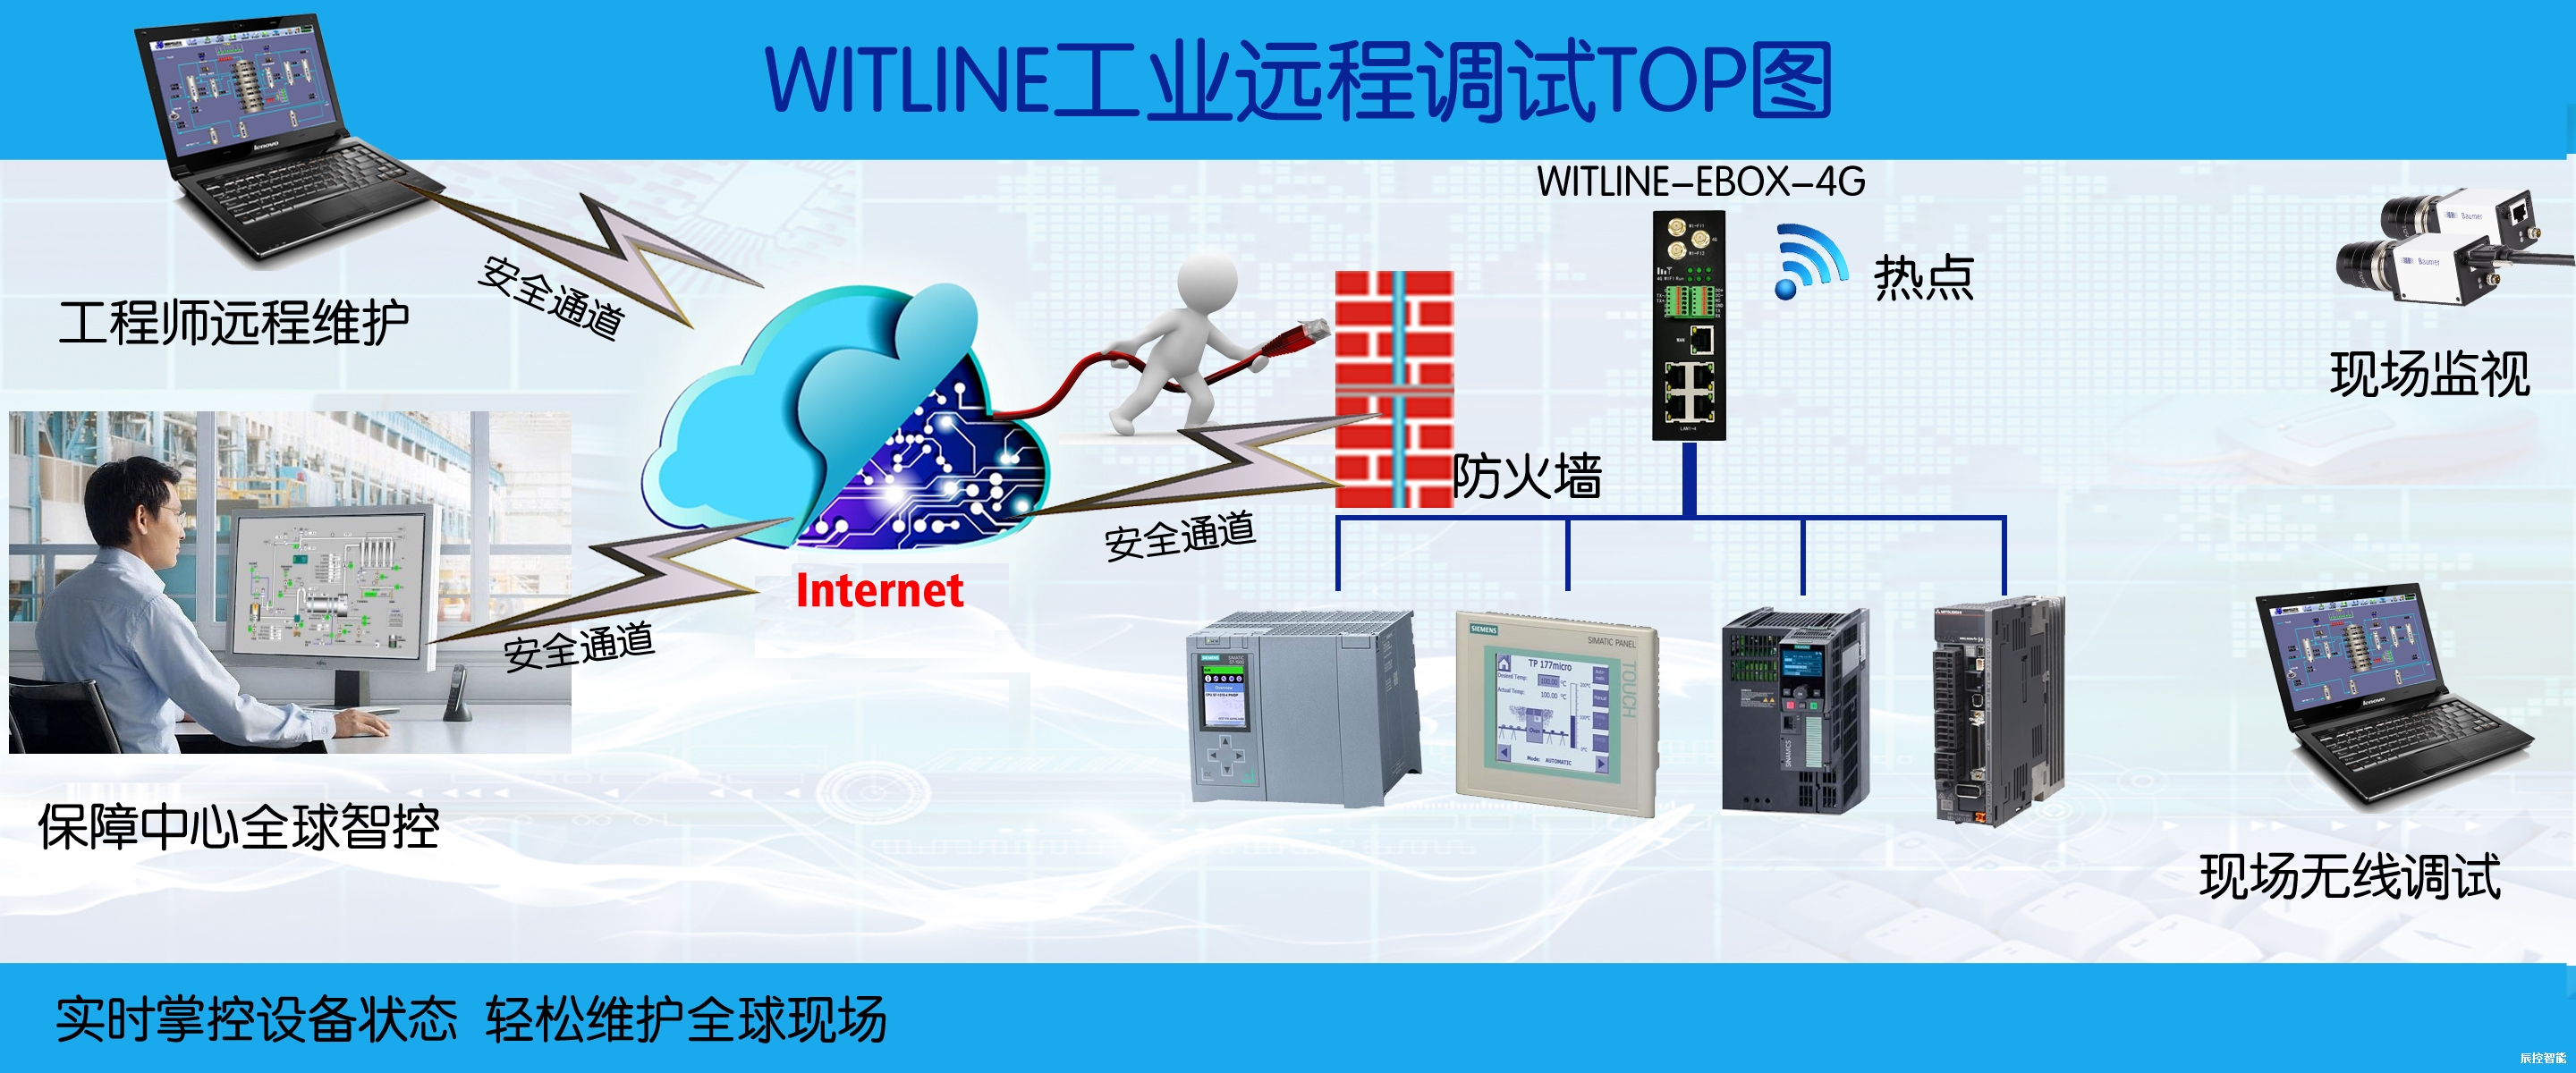 WITLINE-EBOX-4G远程控制器在水产养殖上的应用